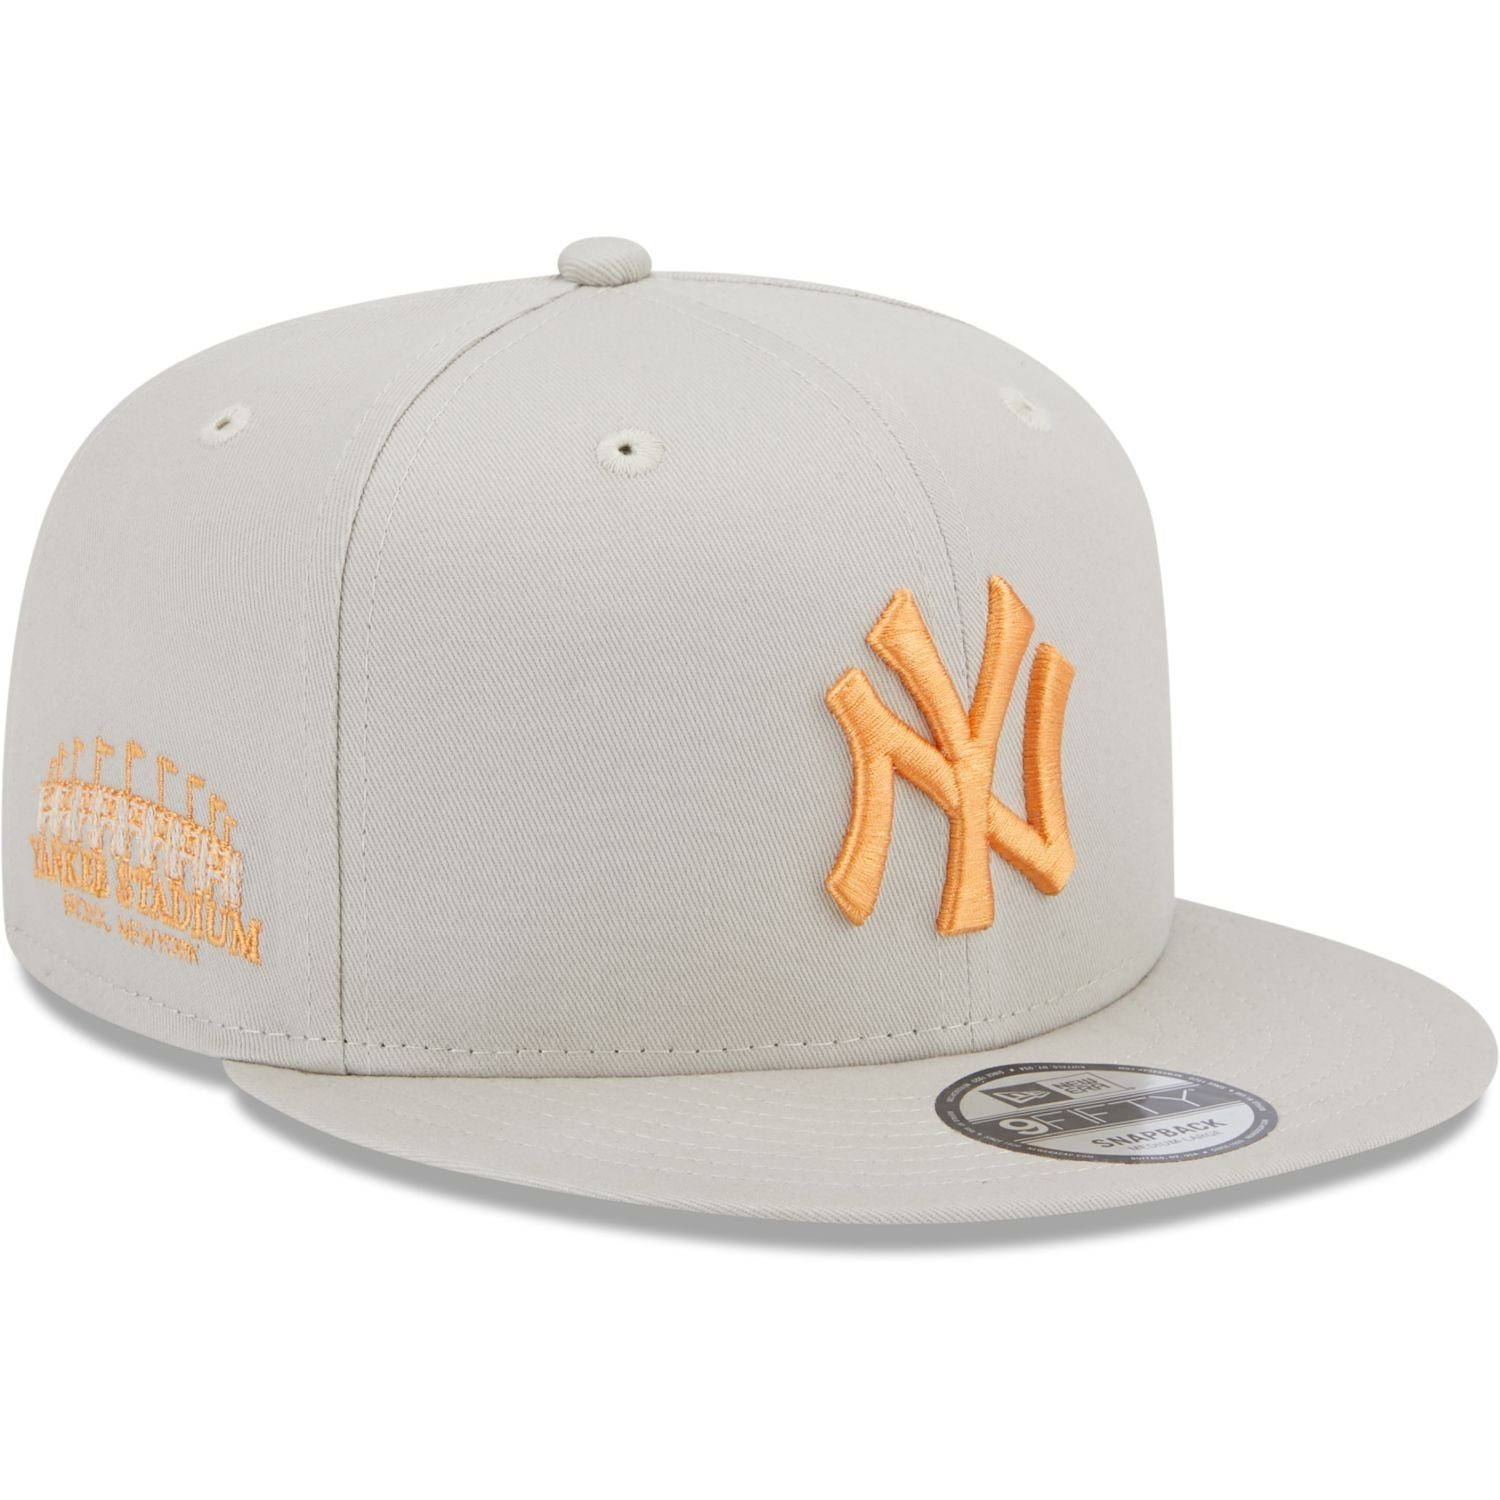 Cap 9Fifty Era New Yankees New York SIDEPATCH Snapback